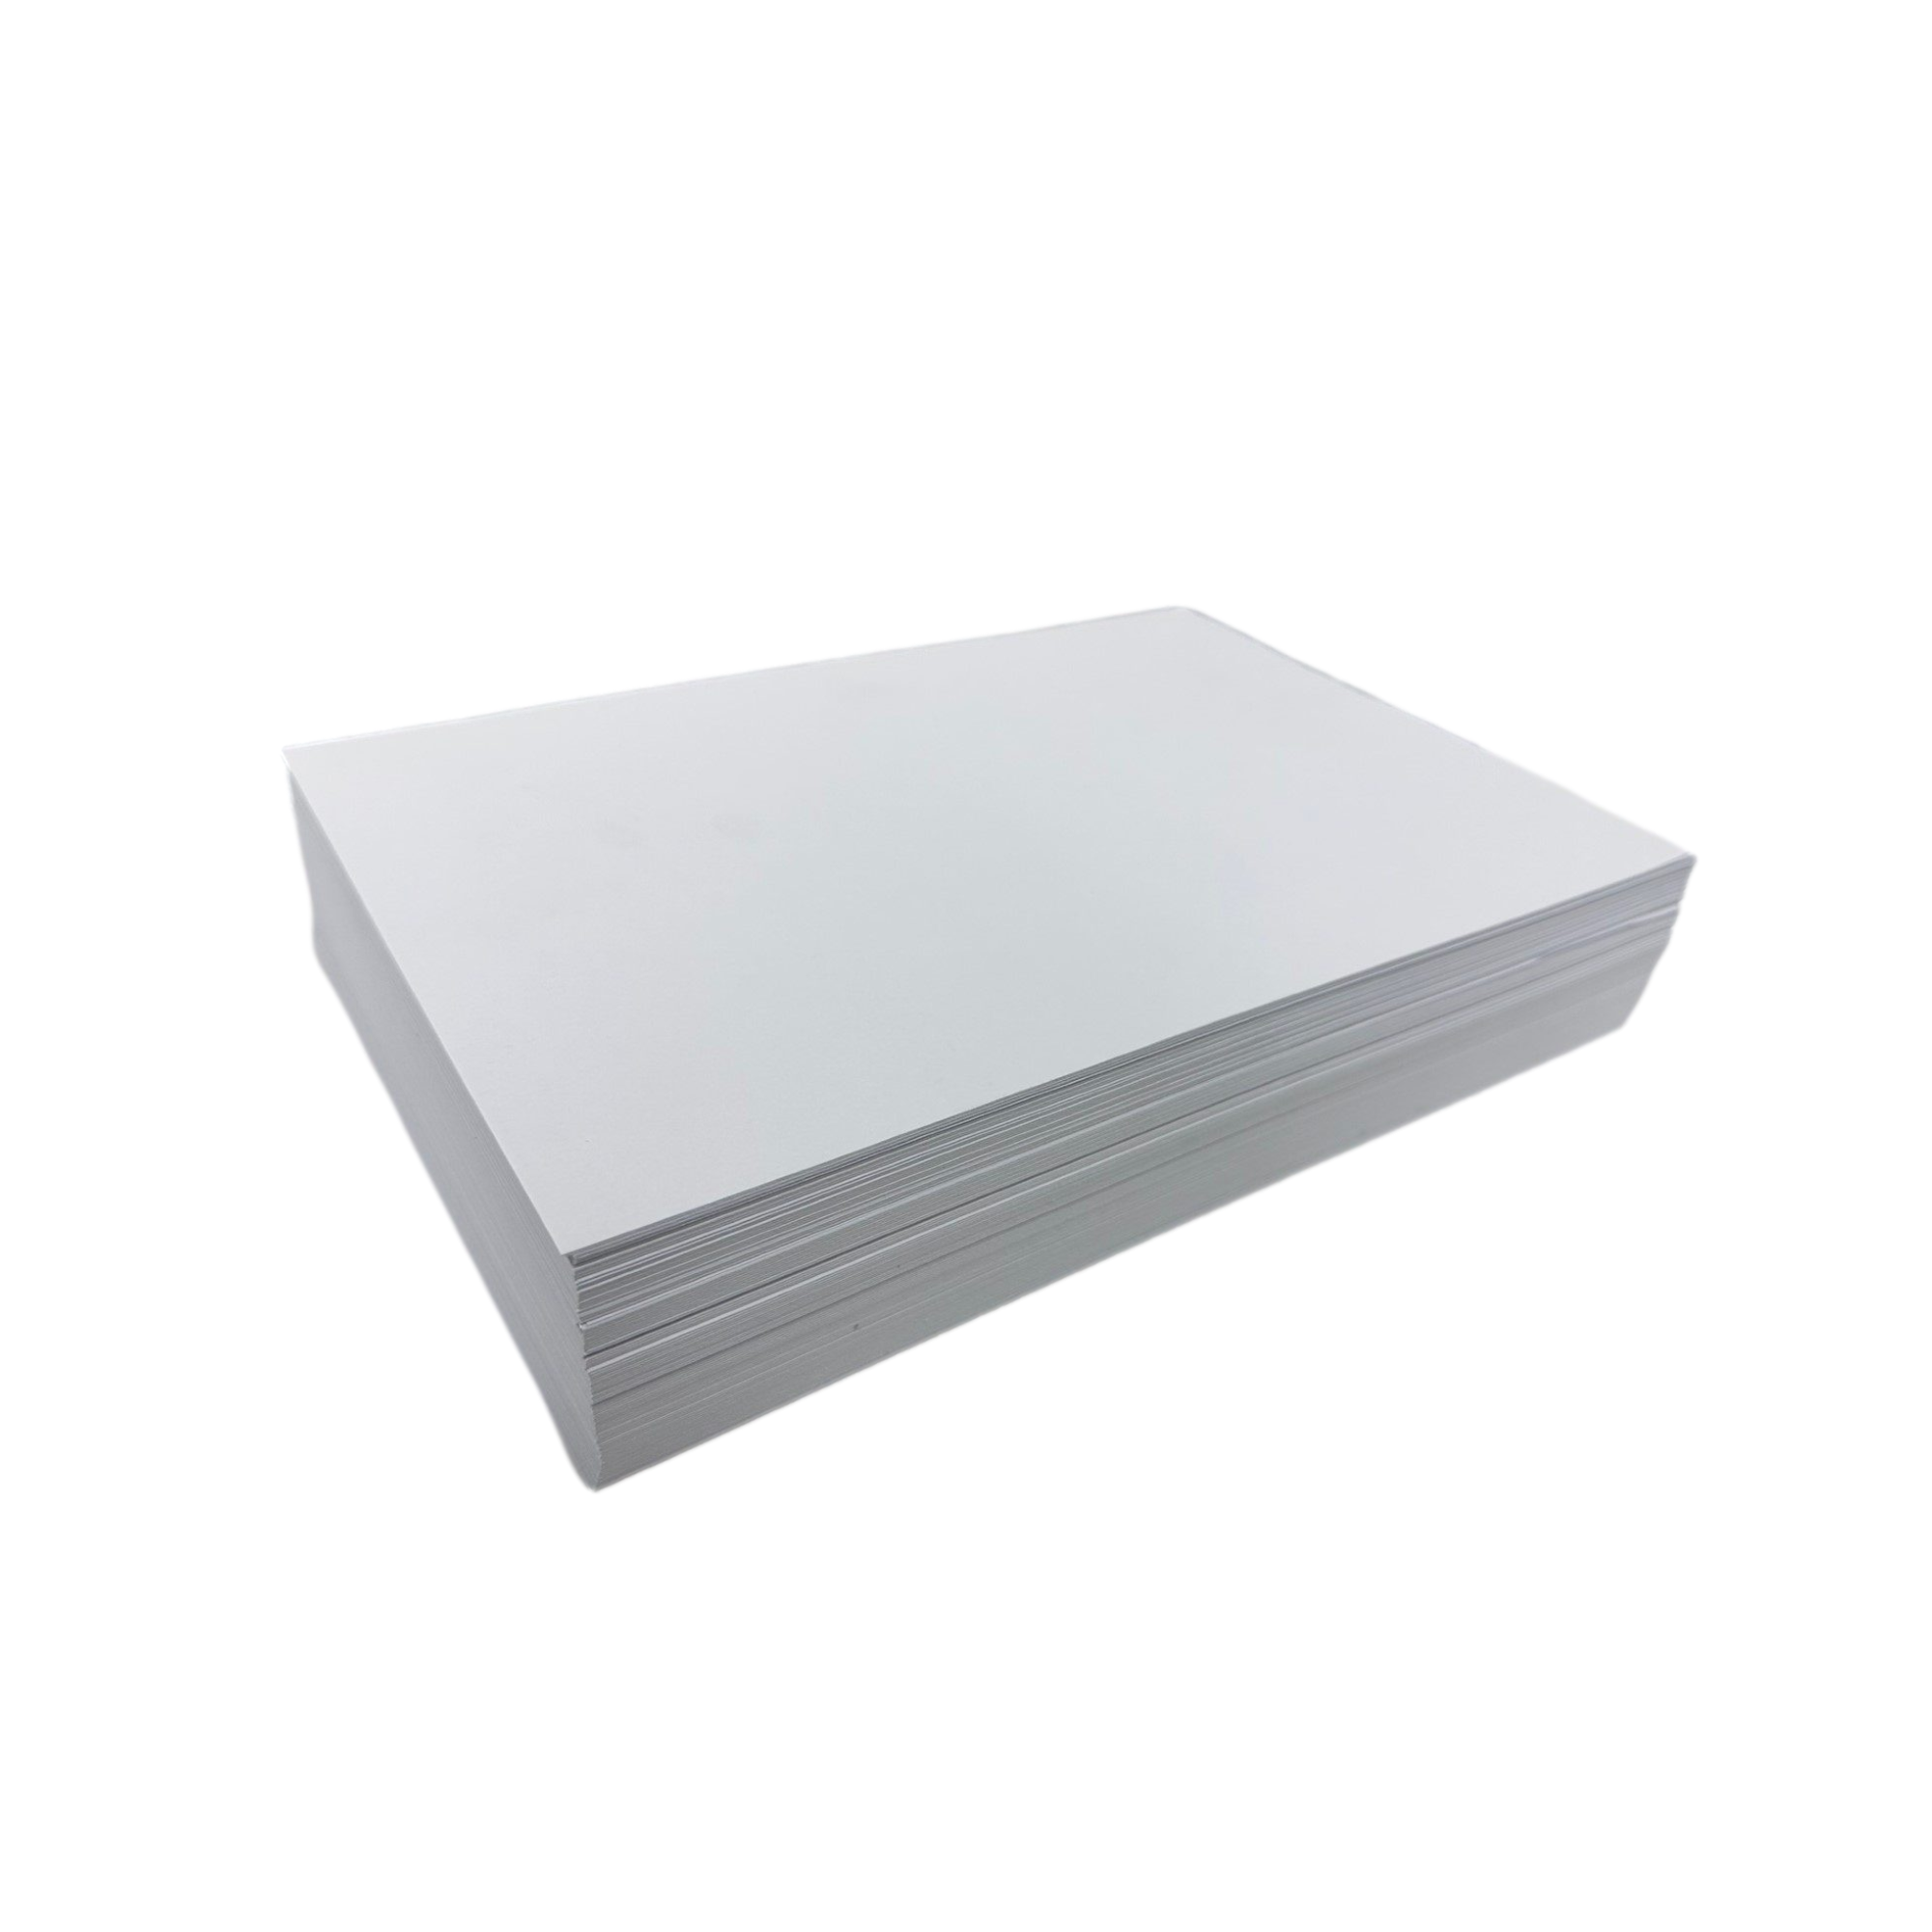 A4 Copy Paper Premium White 80gsm [210mm x 297mm]